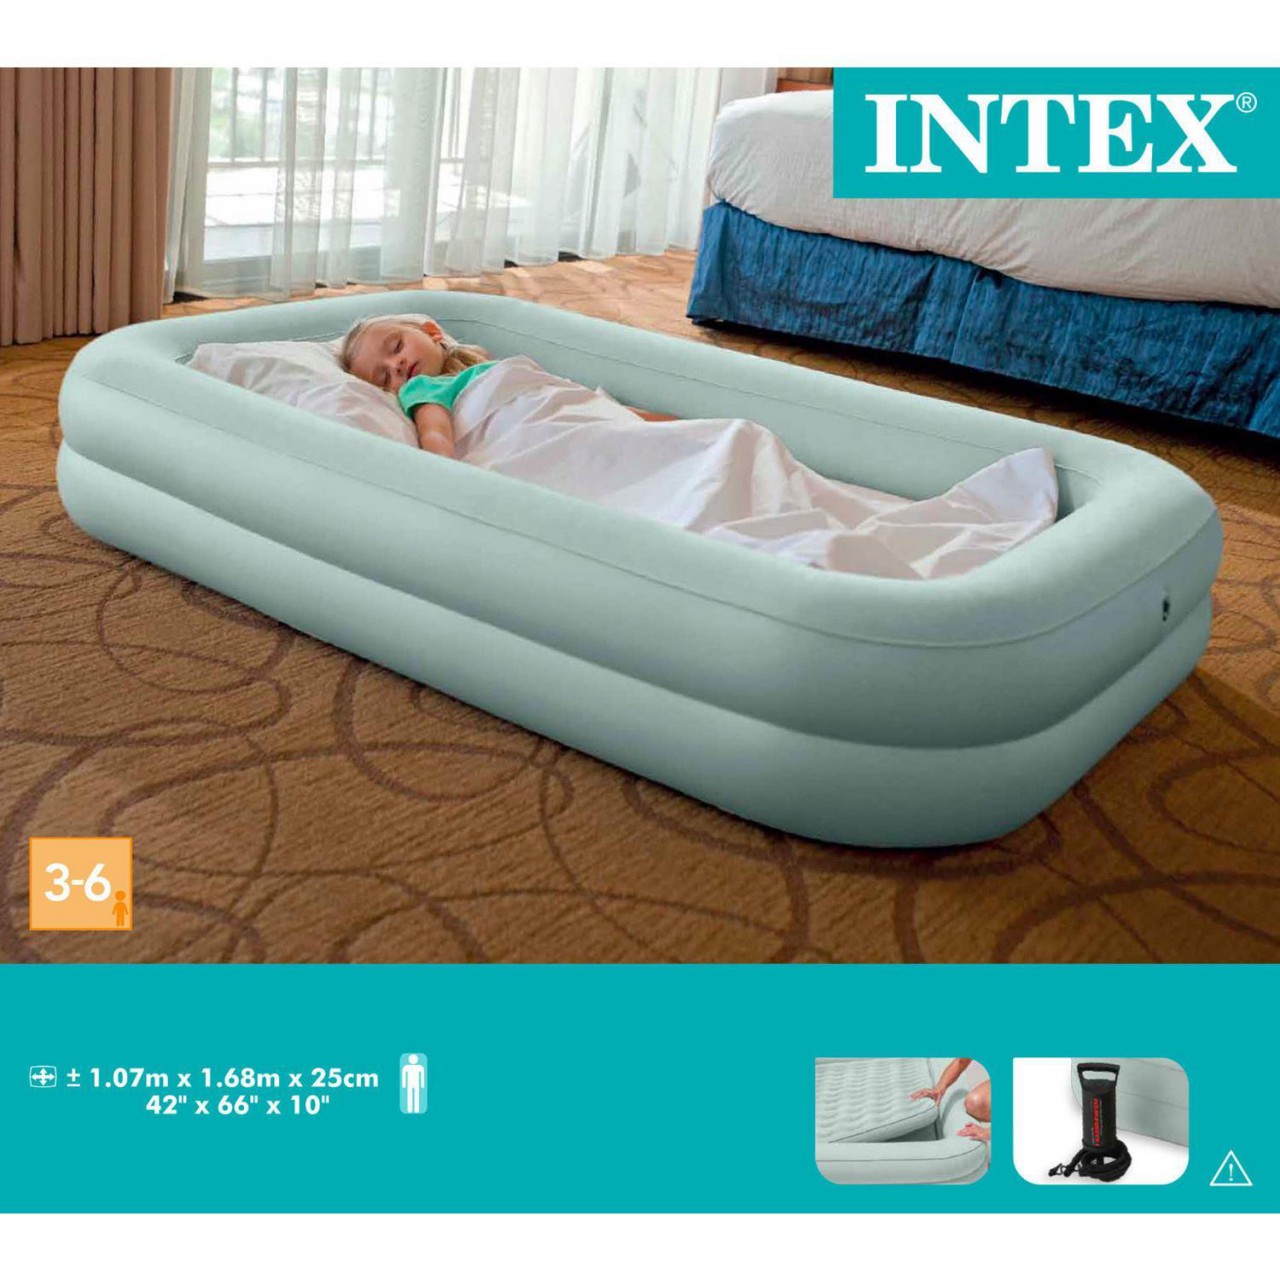 Intex 66810 Luftbett mit Handpumpe Reisebett Gästebett Kinderbett 168x107x25cm